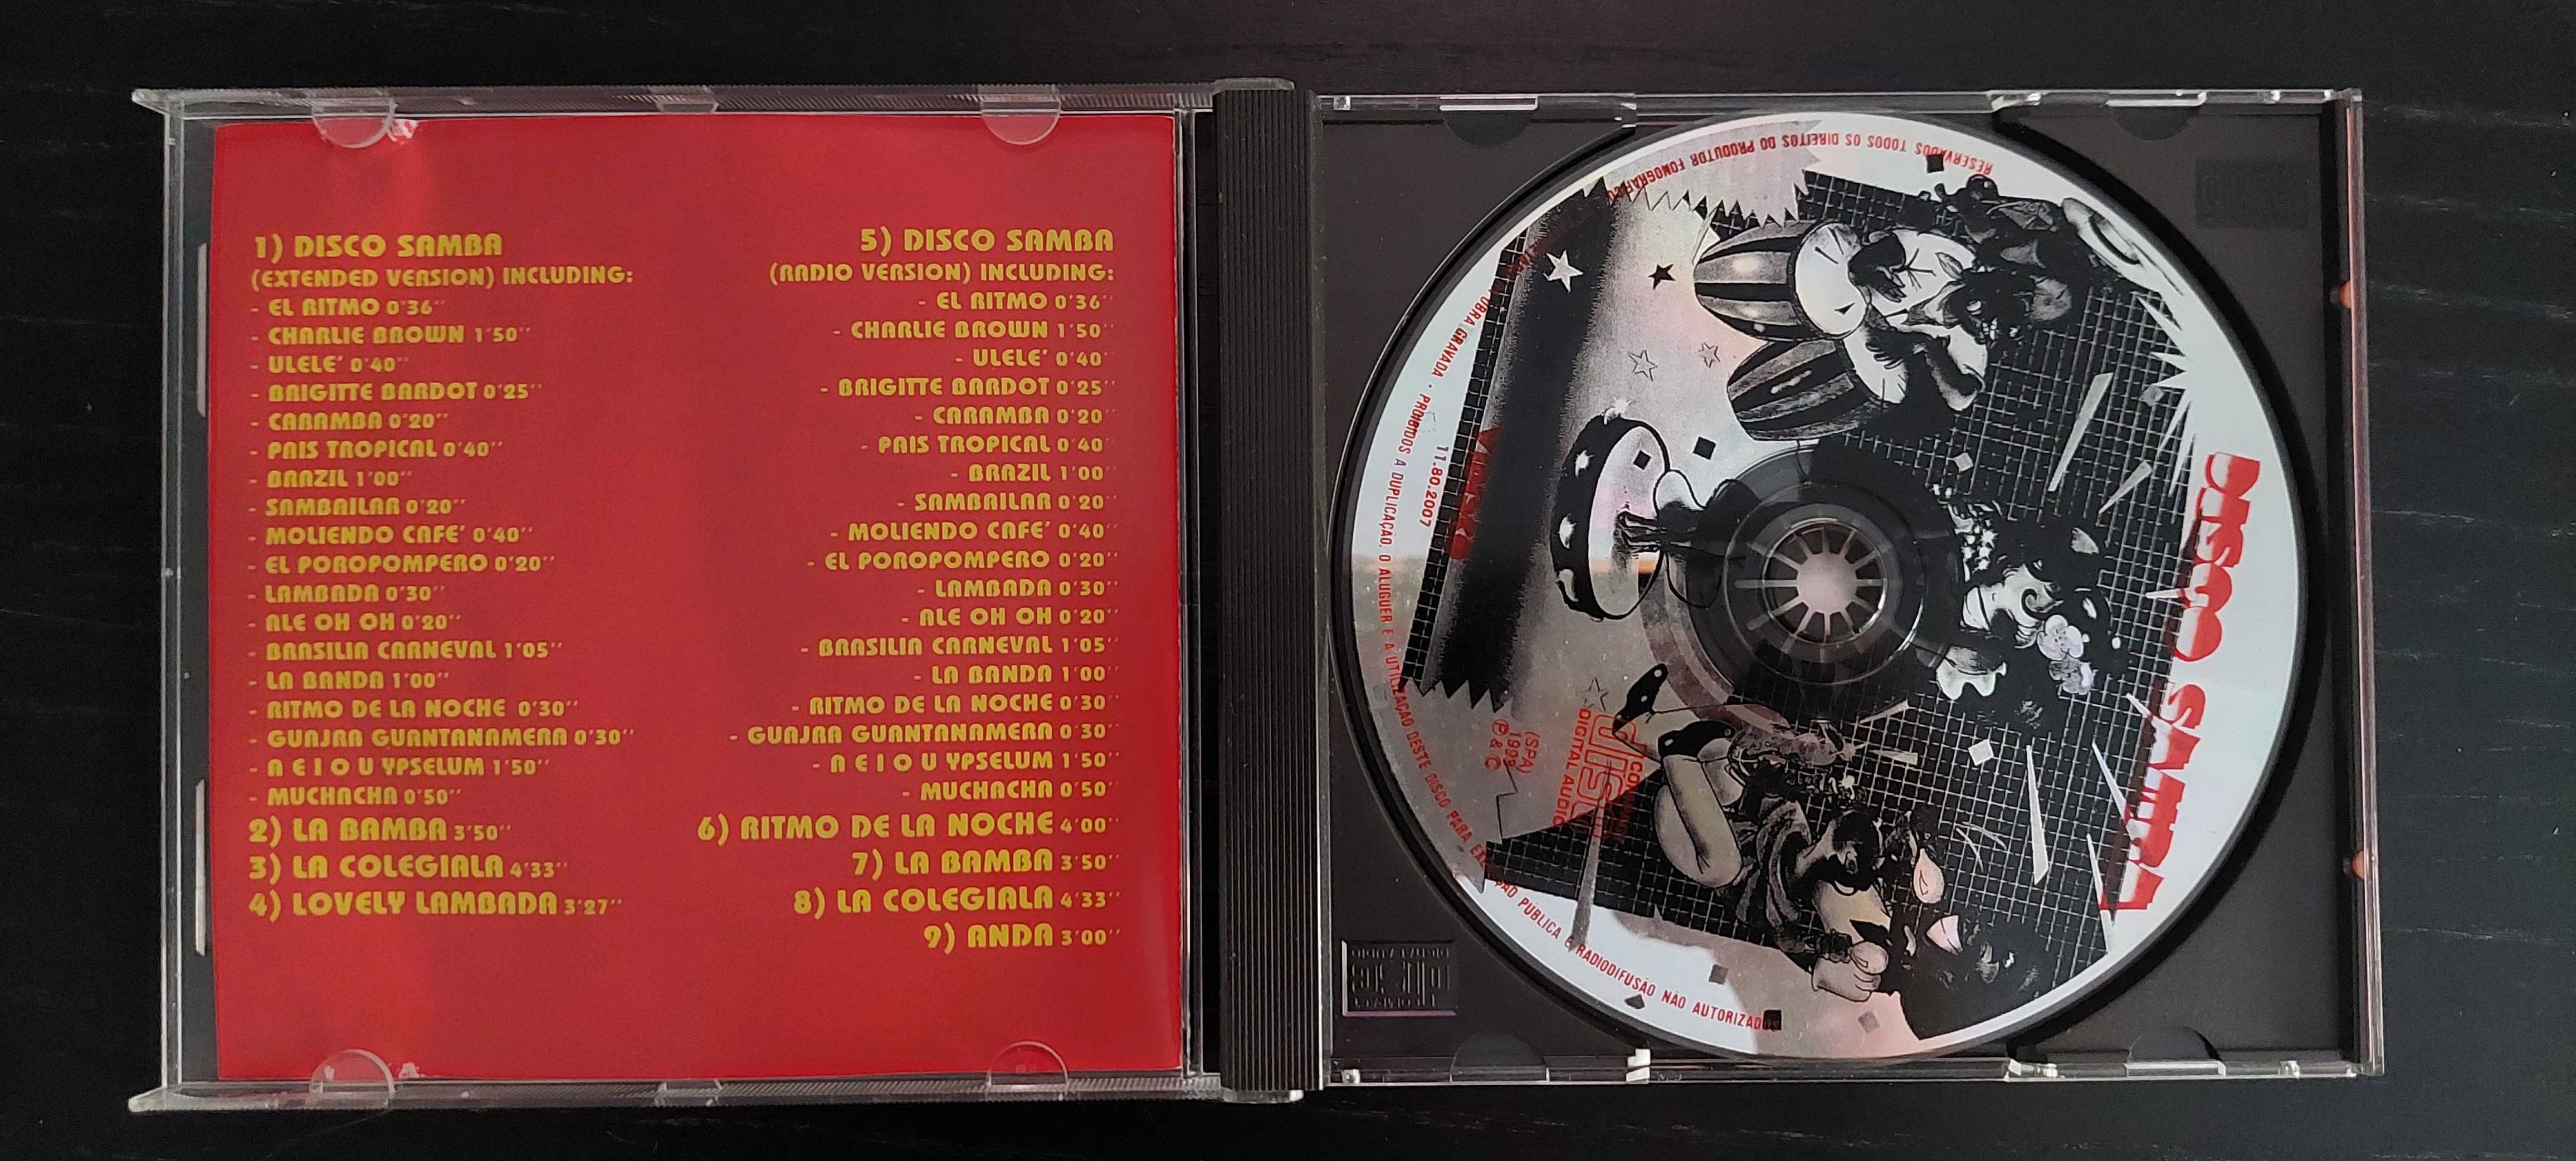 CD Original Disco Samba – Los Mayos